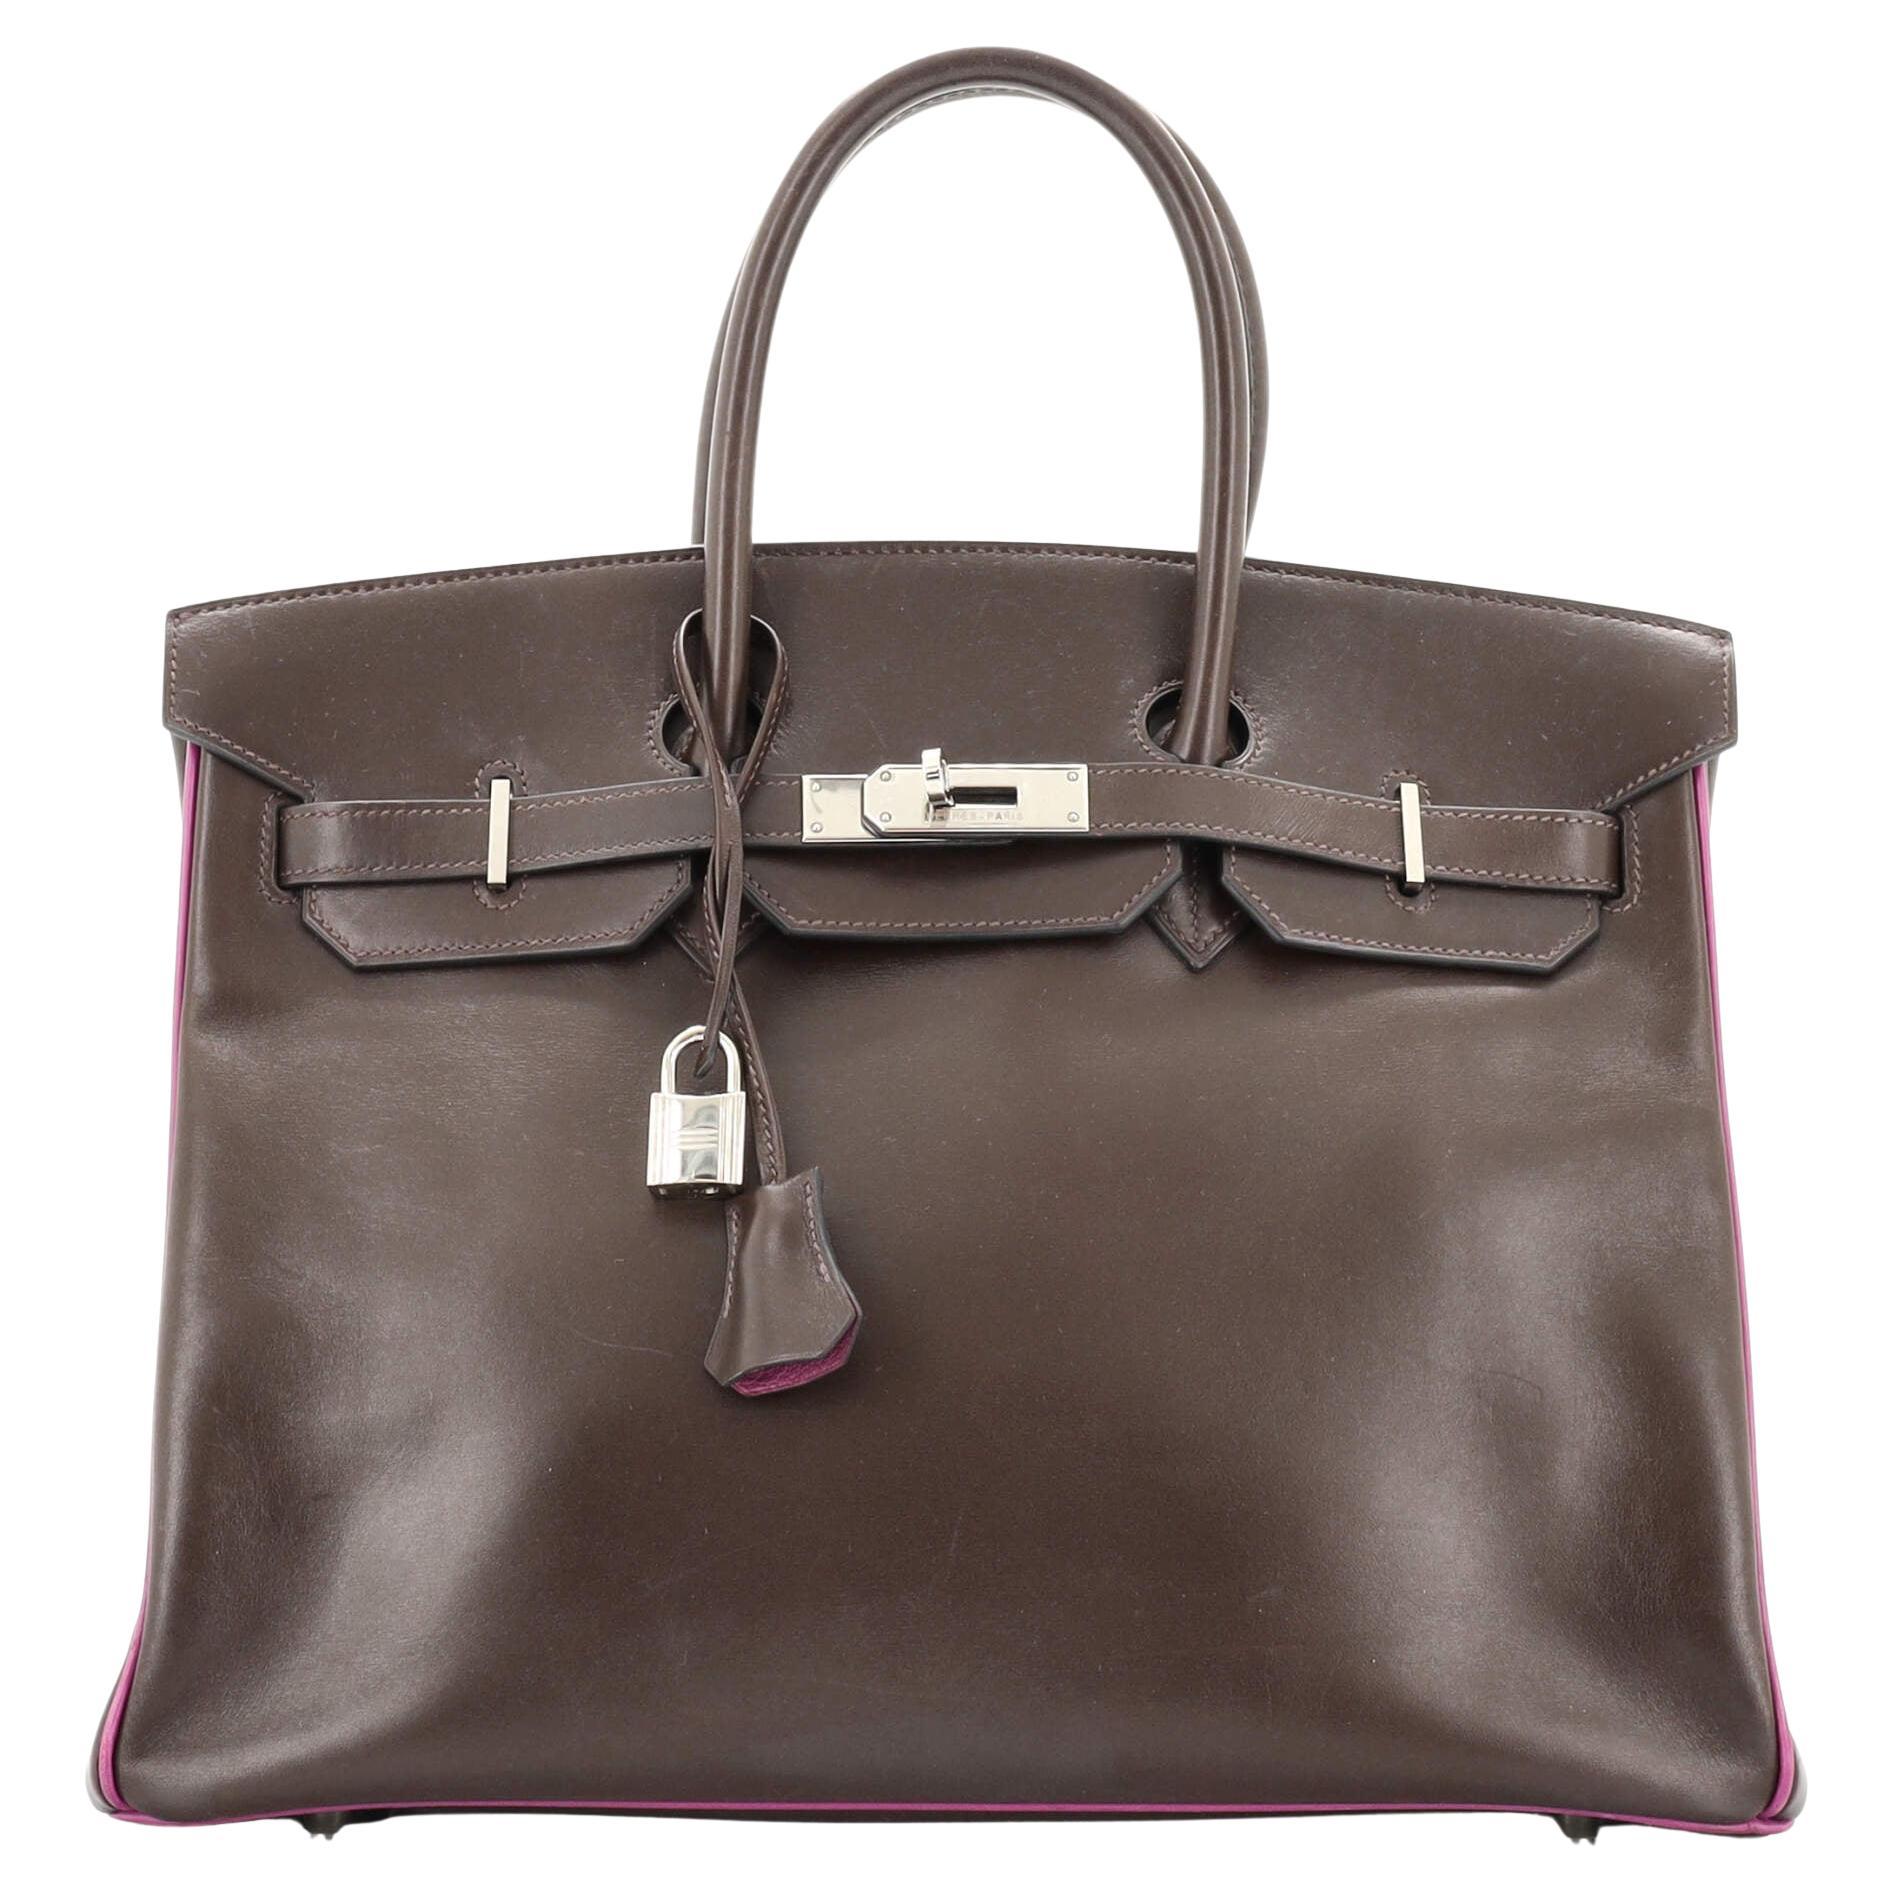 Hermes Birkin Handbag Bicolor Box Calf with Palladium Hardware 35